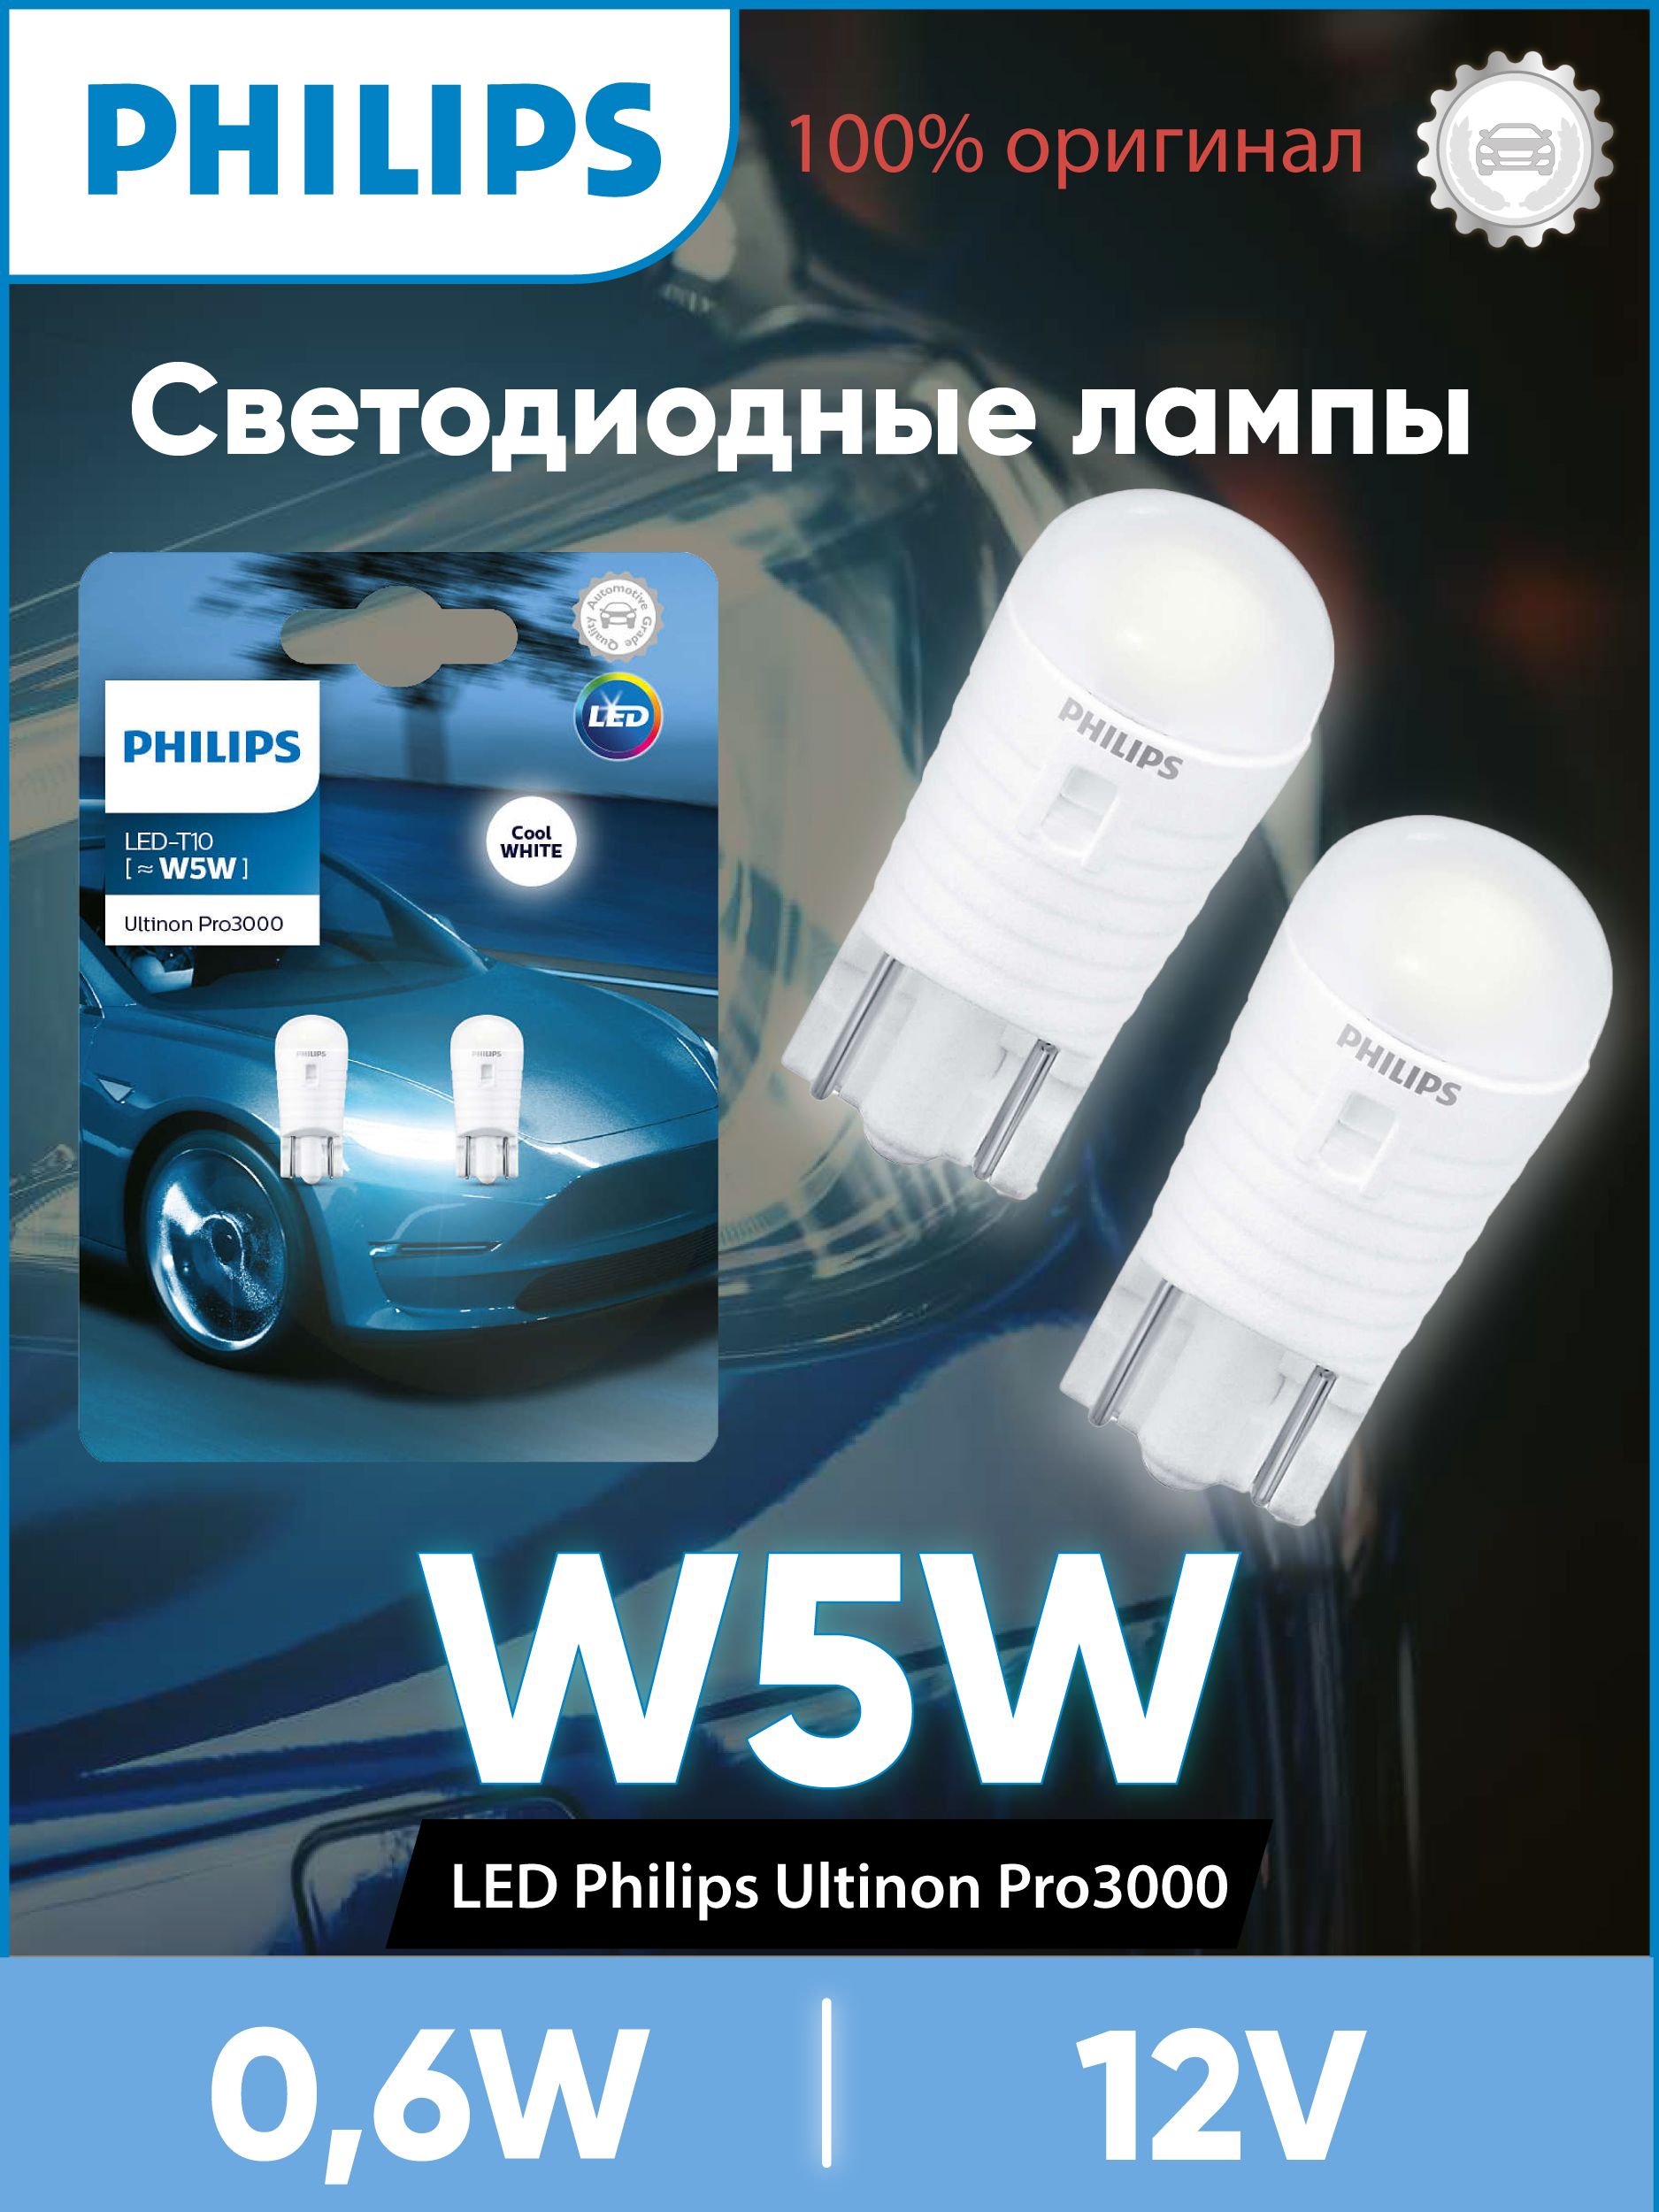 Philips T10 W5W – купить в интернет-магазине OZON по низкой цене